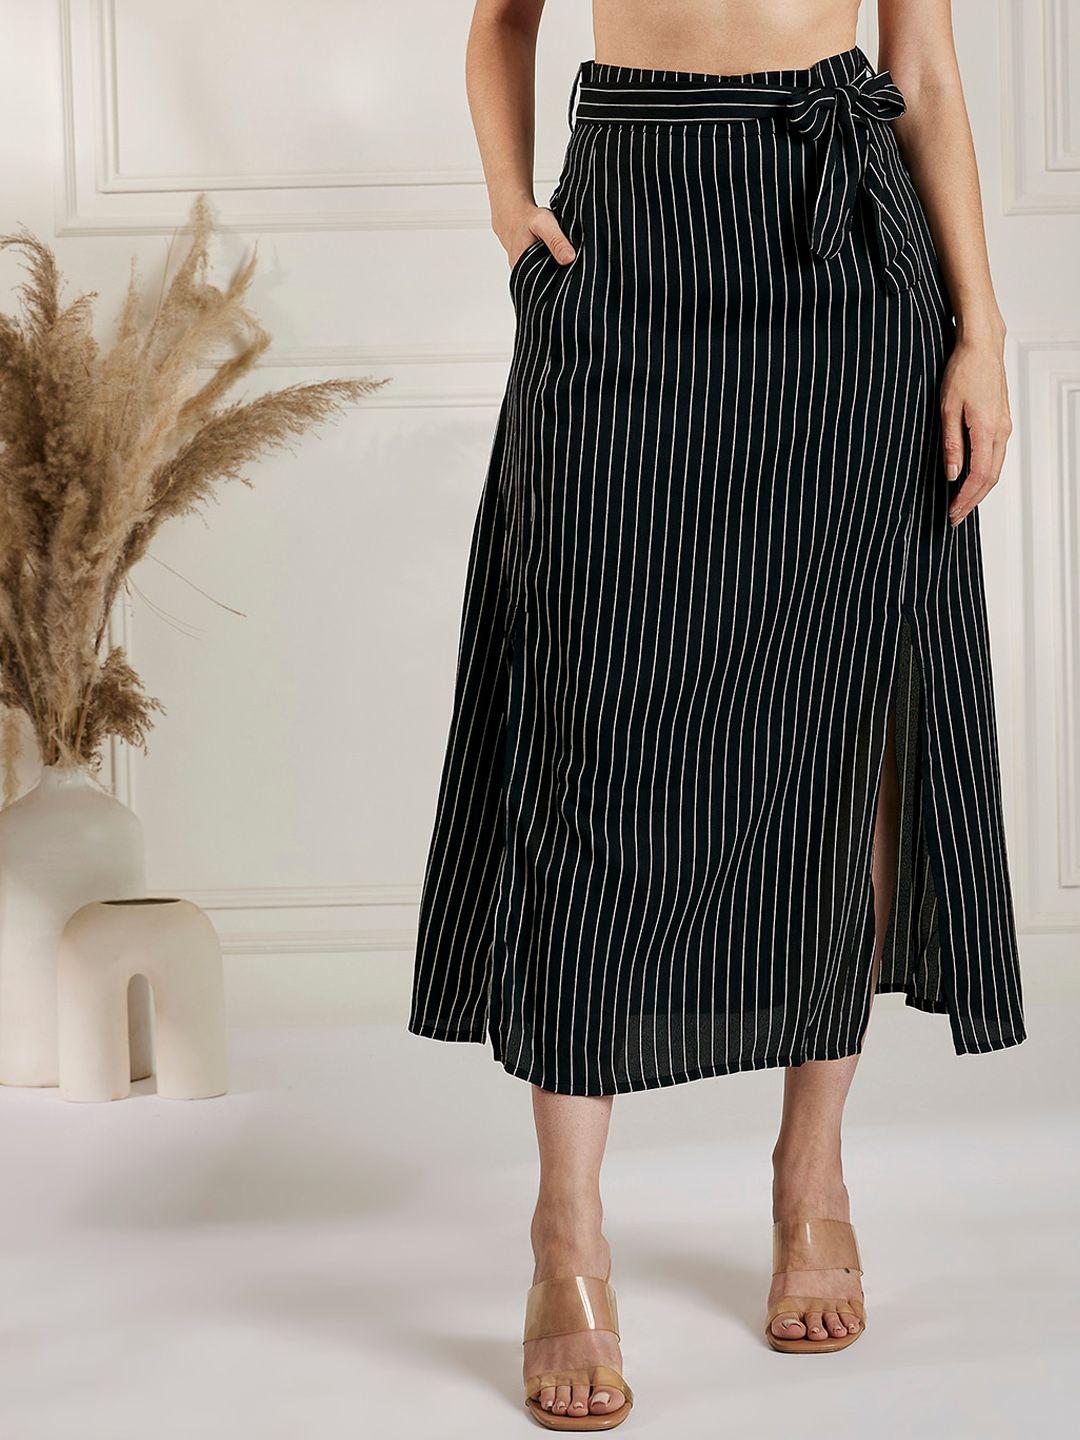 marie-claire-black-&-white-striped-a-line-midi-skirt